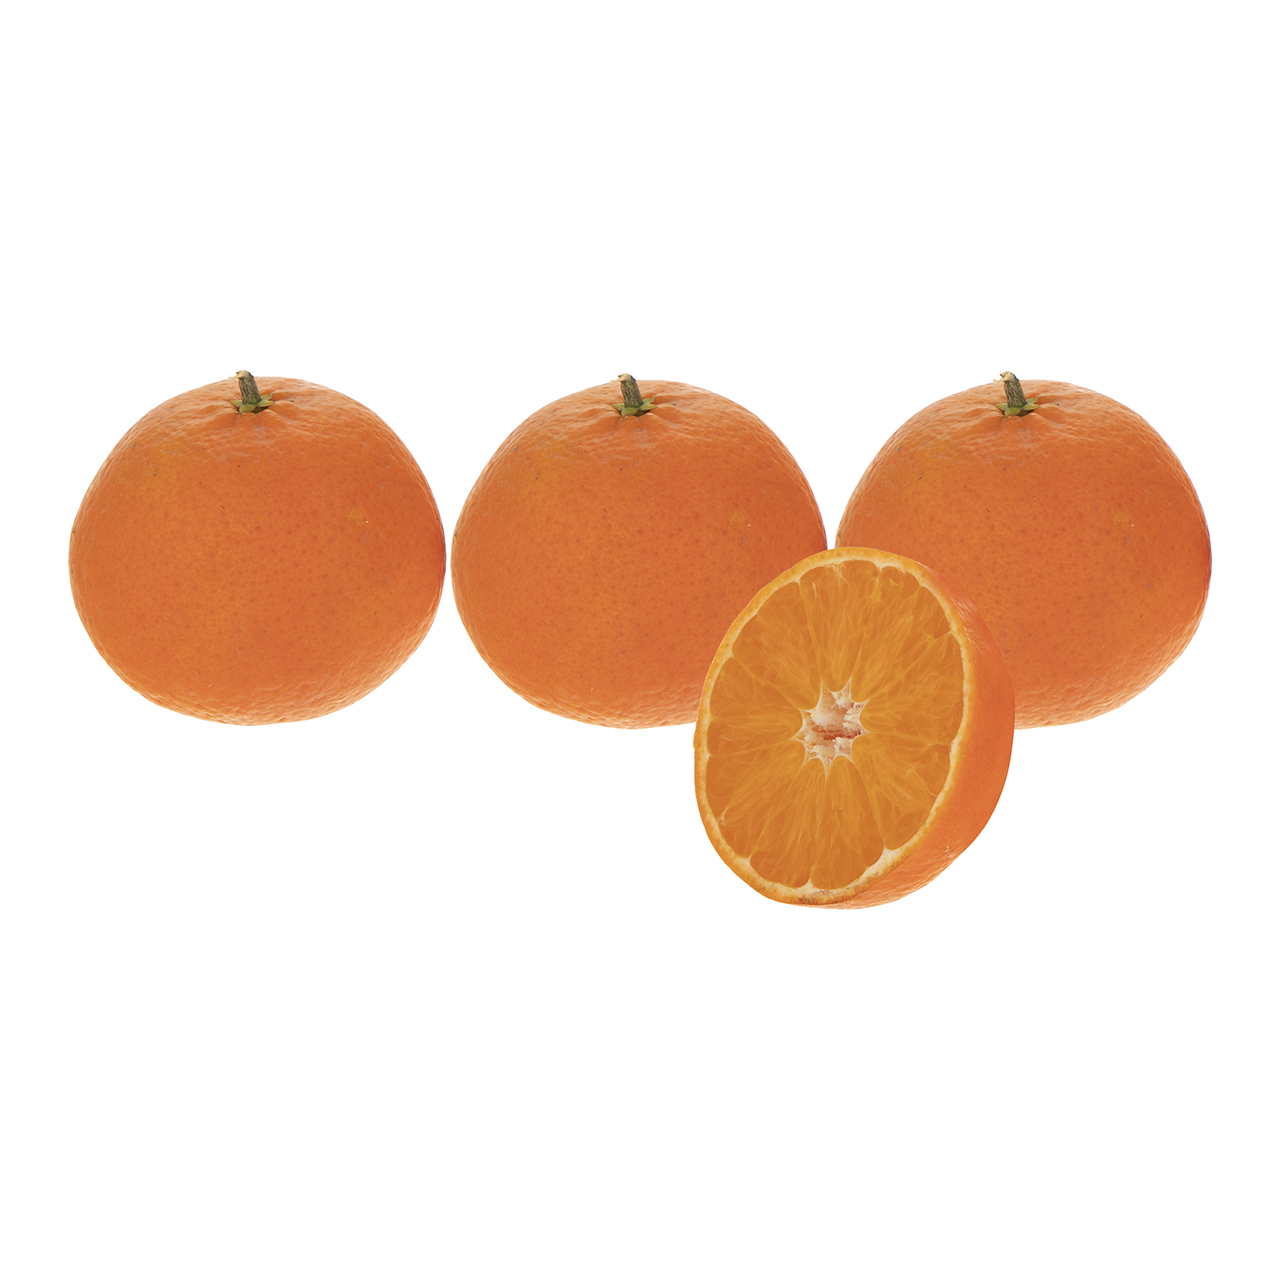 نارنگی پچ - 1 کیلوگرم (حداقل 5 عدد)